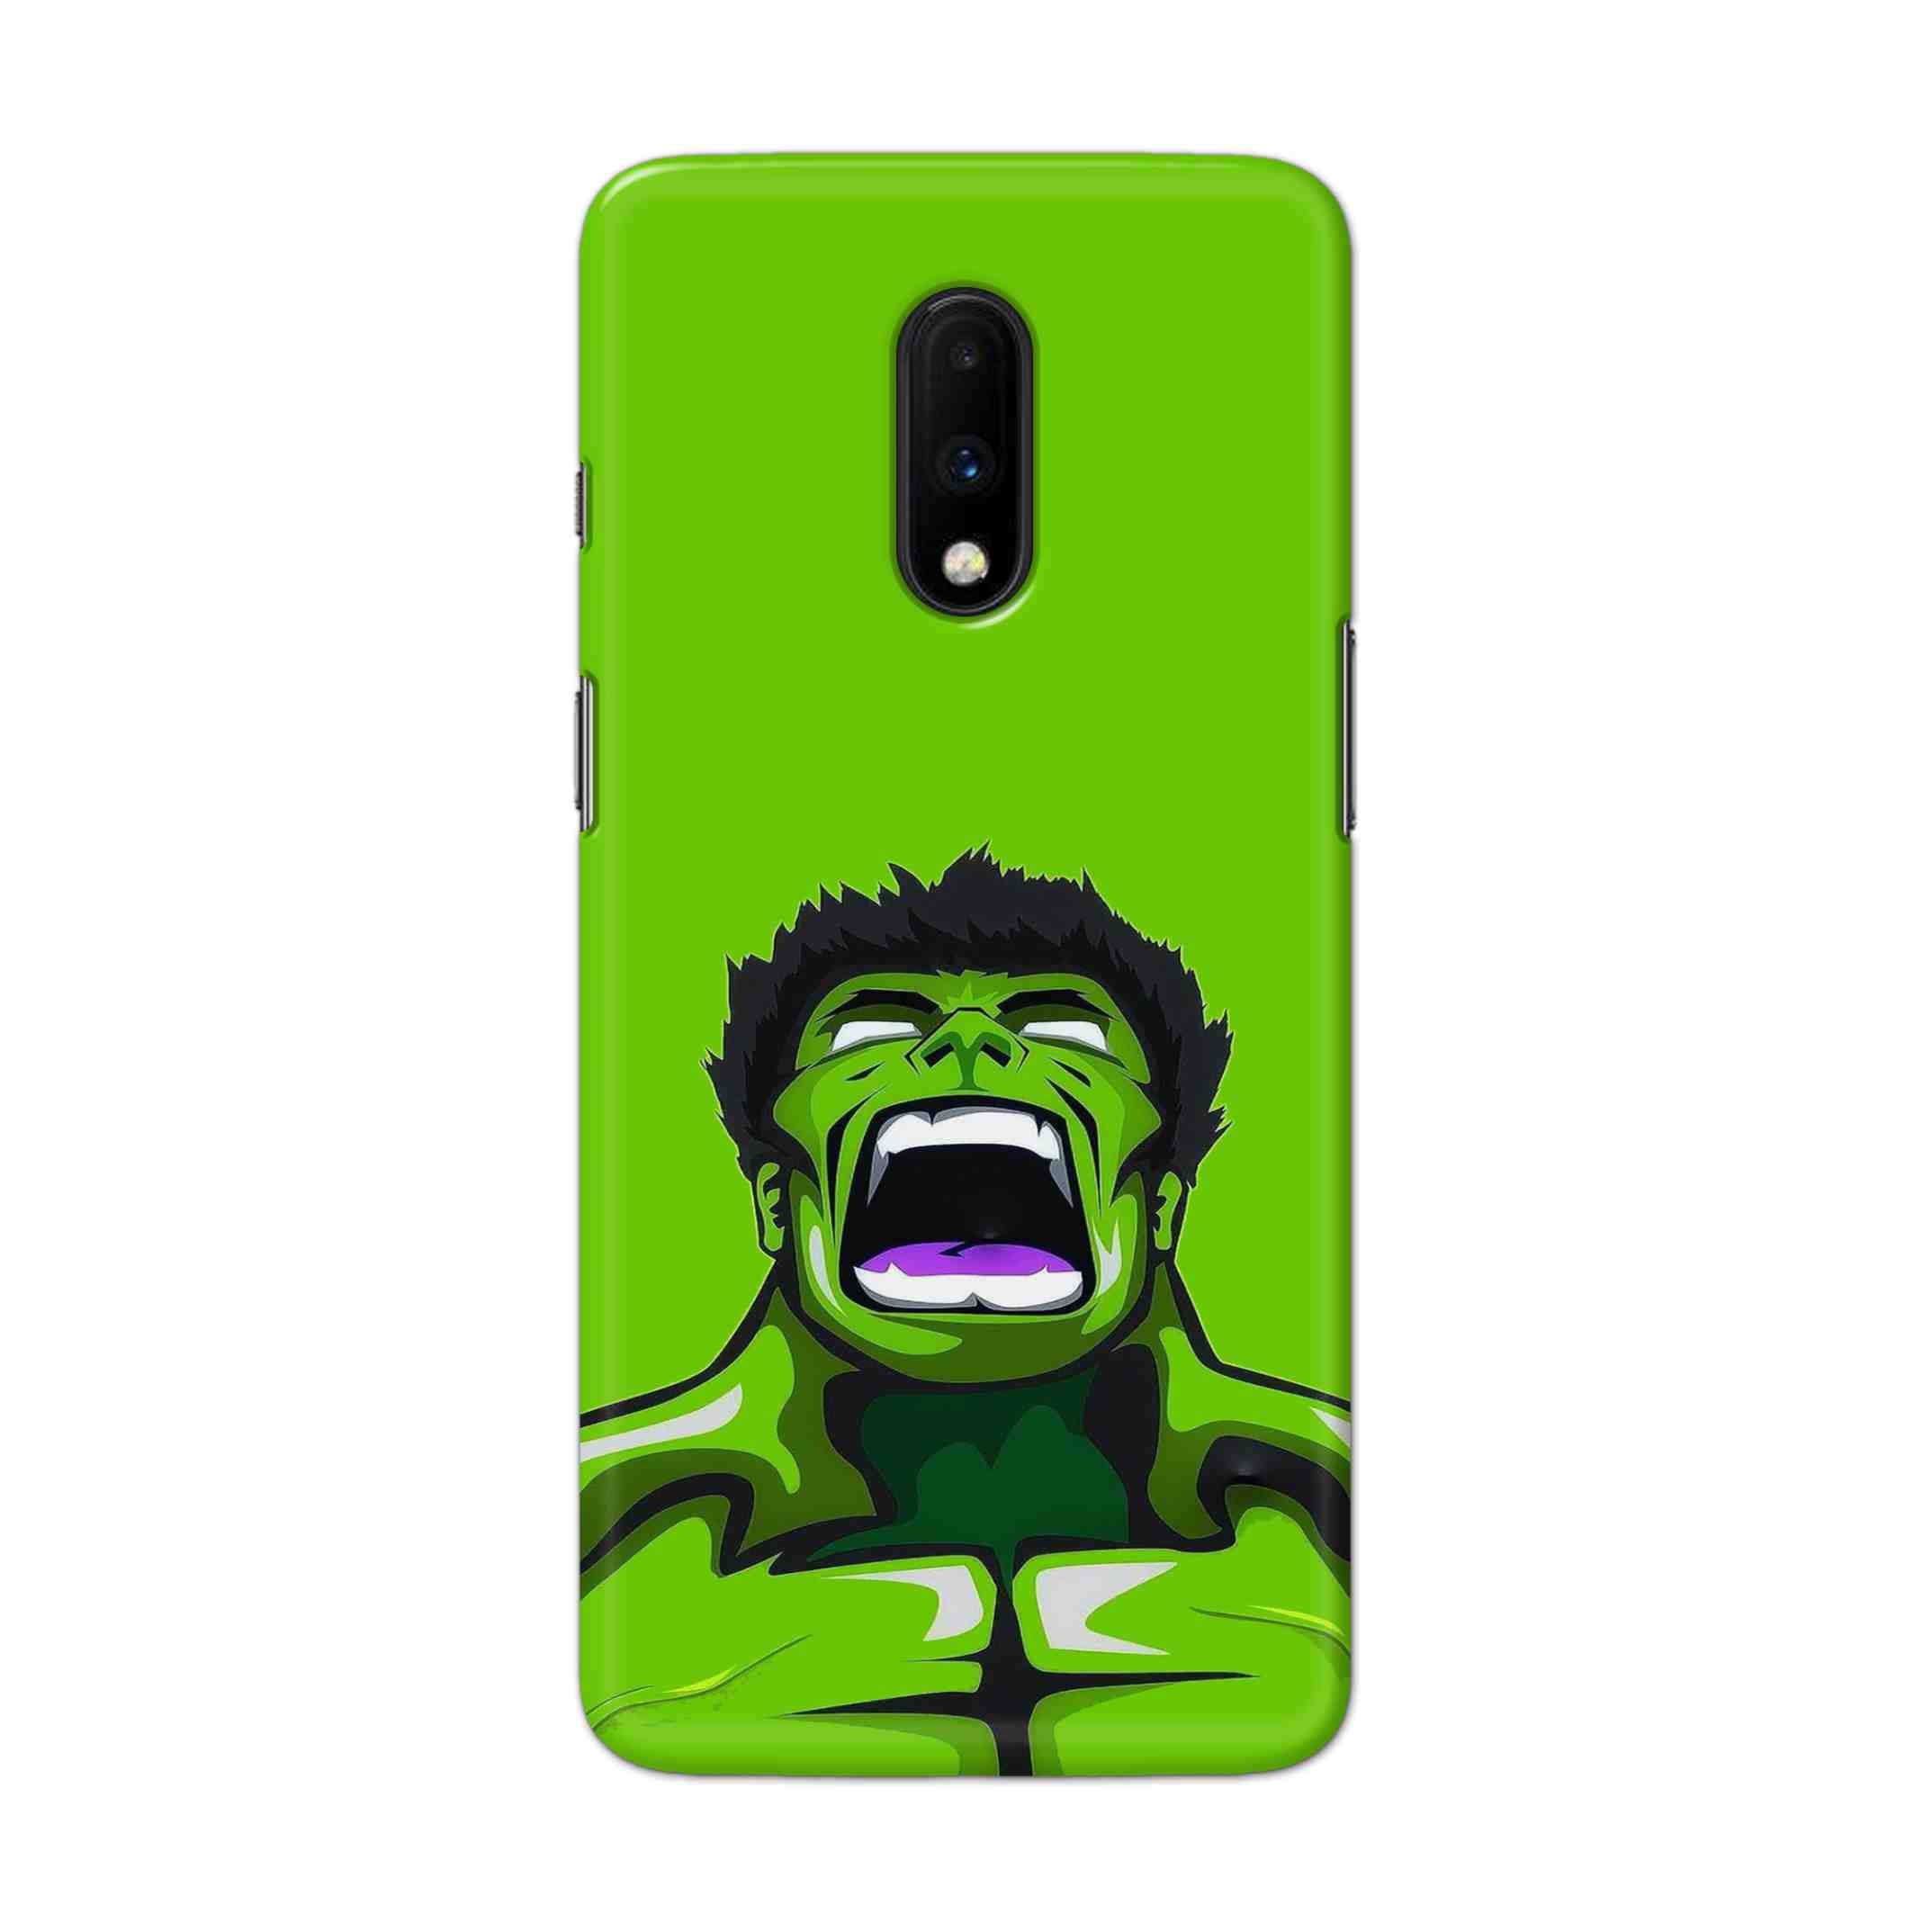 Buy Green Hulk Hard Back Mobile Phone Case Cover For OnePlus 7 Online